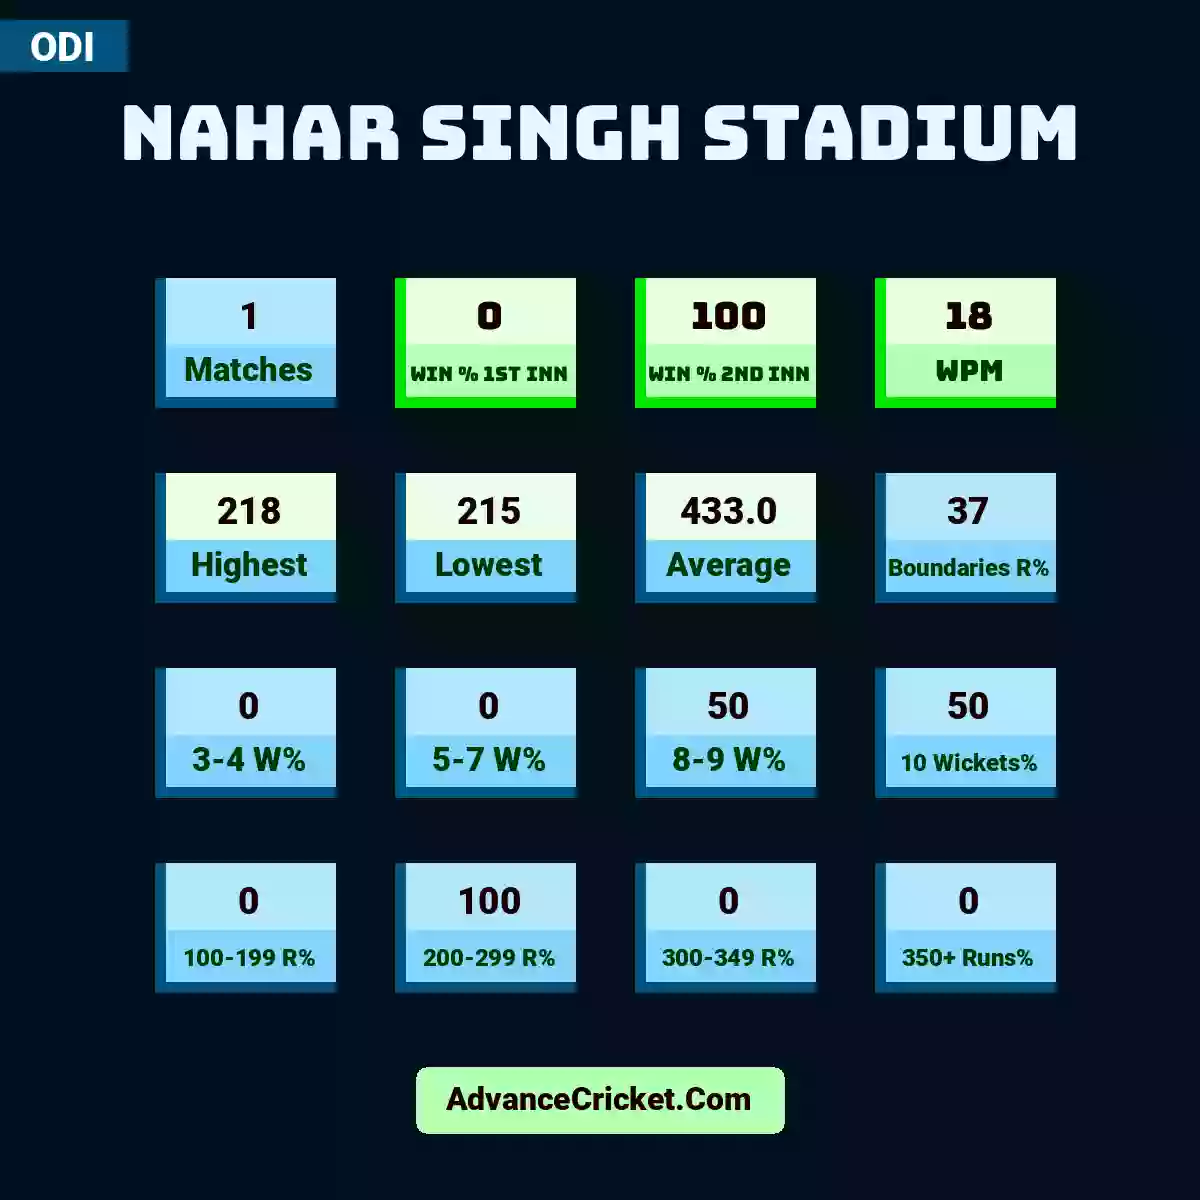 Image showing Nahar Singh Stadium with Matches: 1, Win % 1st Inn: 0, Win % 2nd Inn: 100, WPM: 18, Highest: 218, Lowest: 215, Average: 433.0, Boundaries R%: 37, 3-4 W%: 0, 5-7 W%: 0, 8-9 W%: 50, 10 Wickets%: 50, 100-199 R%: 0, 200-299 R%: 100, 300-349 R%: 0, 350+ Runs%: 0.